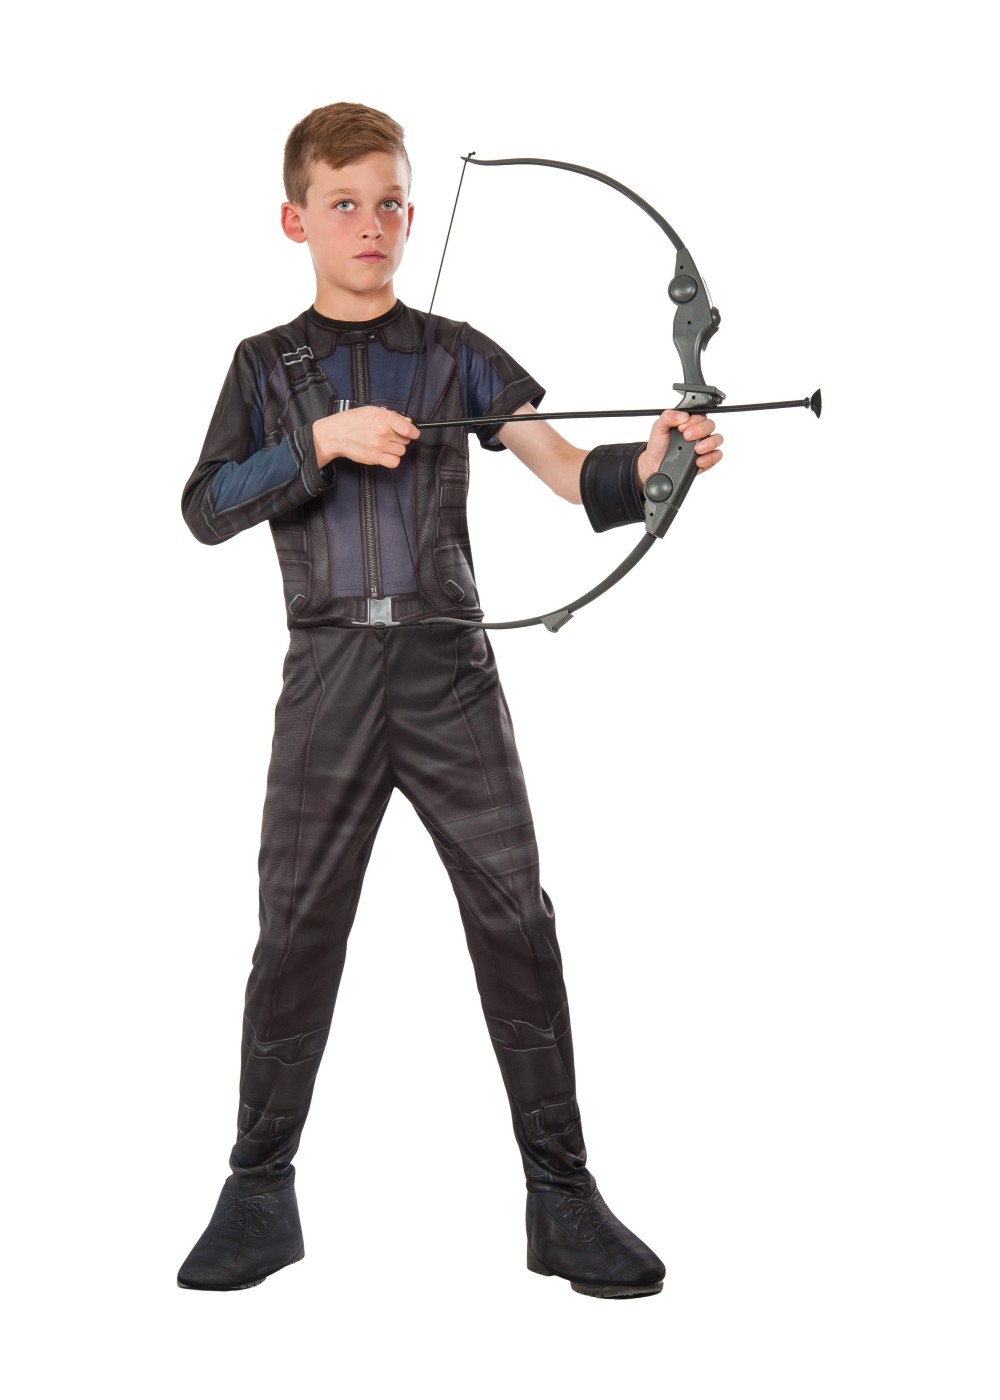 bow arrow accessories